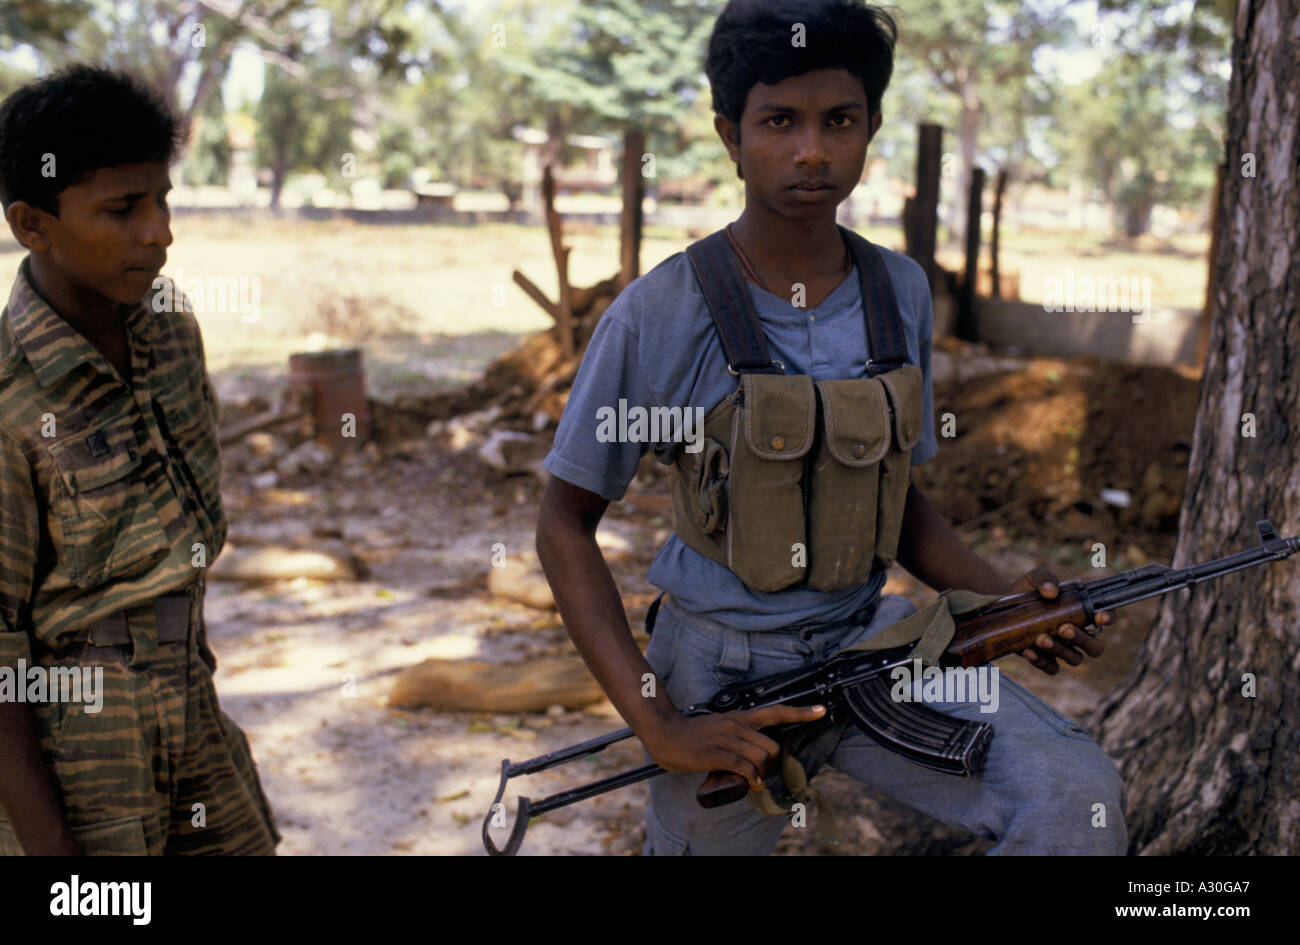 14 years old tamil tiger fighter  near jaffna sri lanka Stock Photo